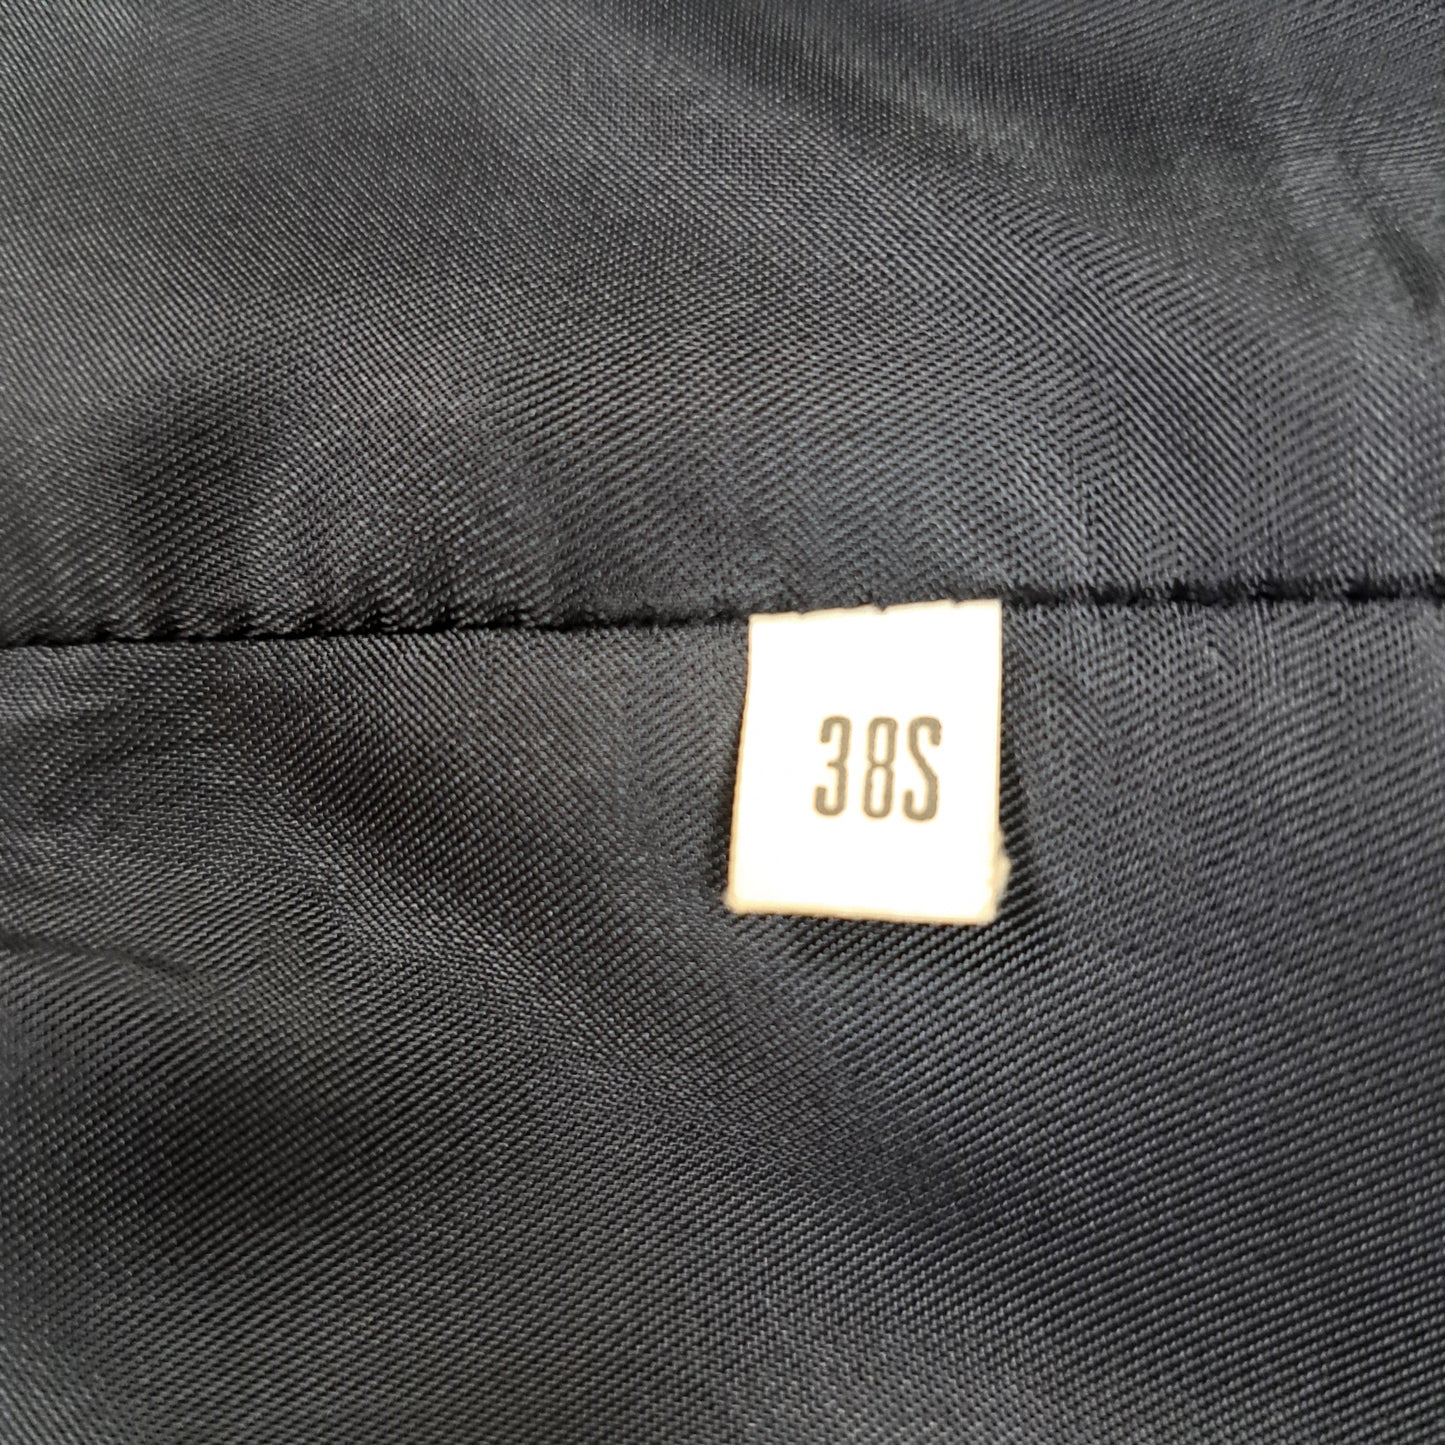 Mens Classic 3 Piece Grey Pinstripe Suit Size 38S